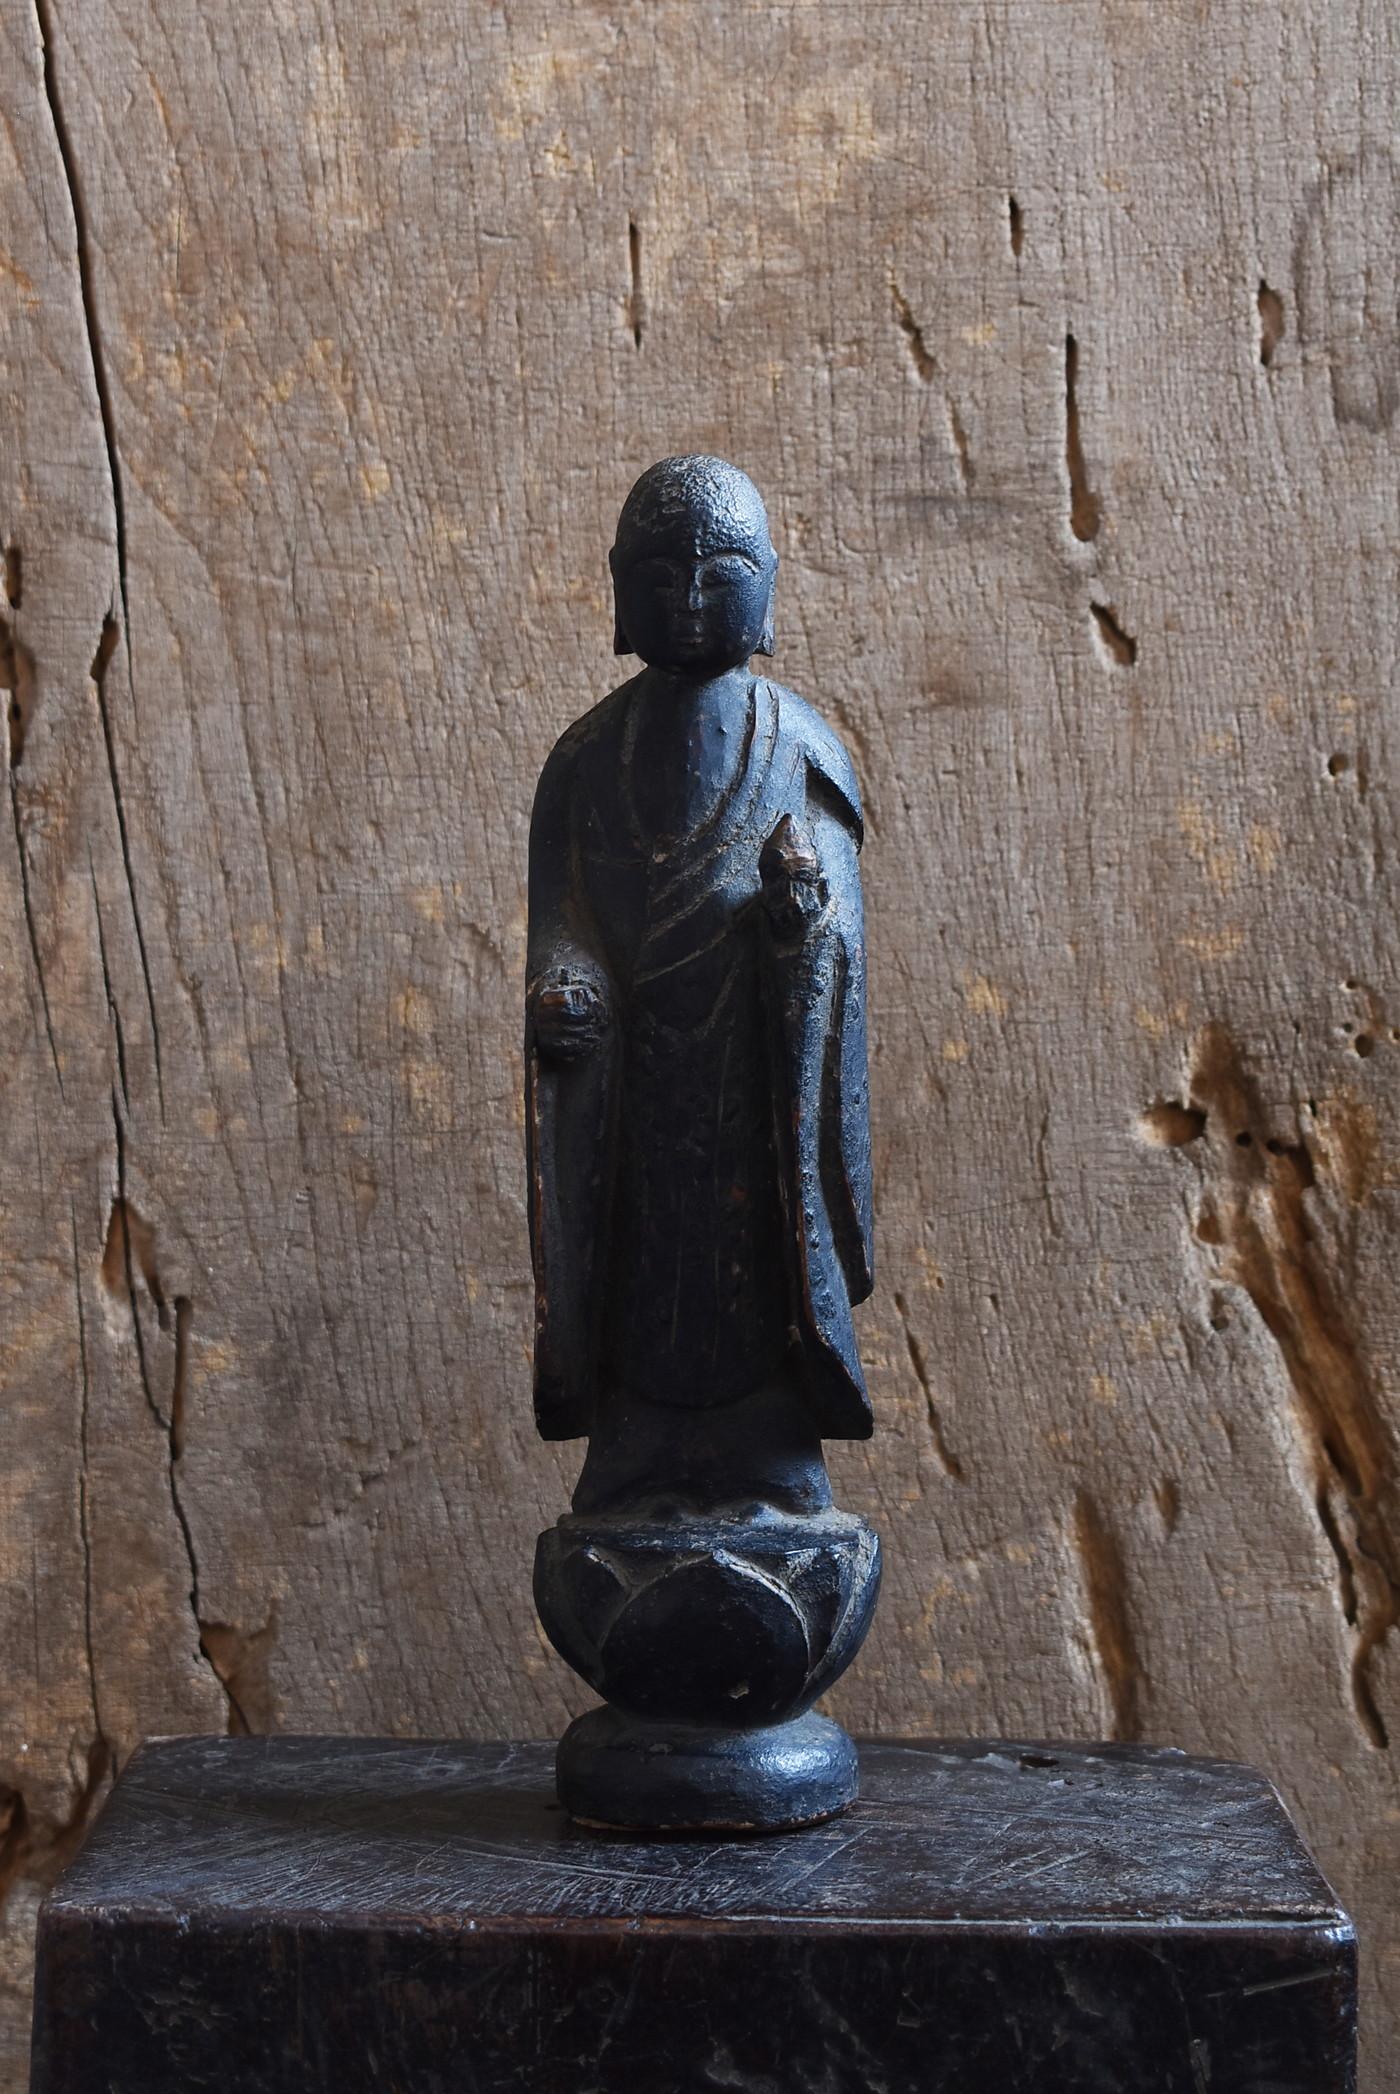 Japane Wood Carving Jizo Bodhisattva Statue /Buddha Statue, circa 1400s-1600s 13